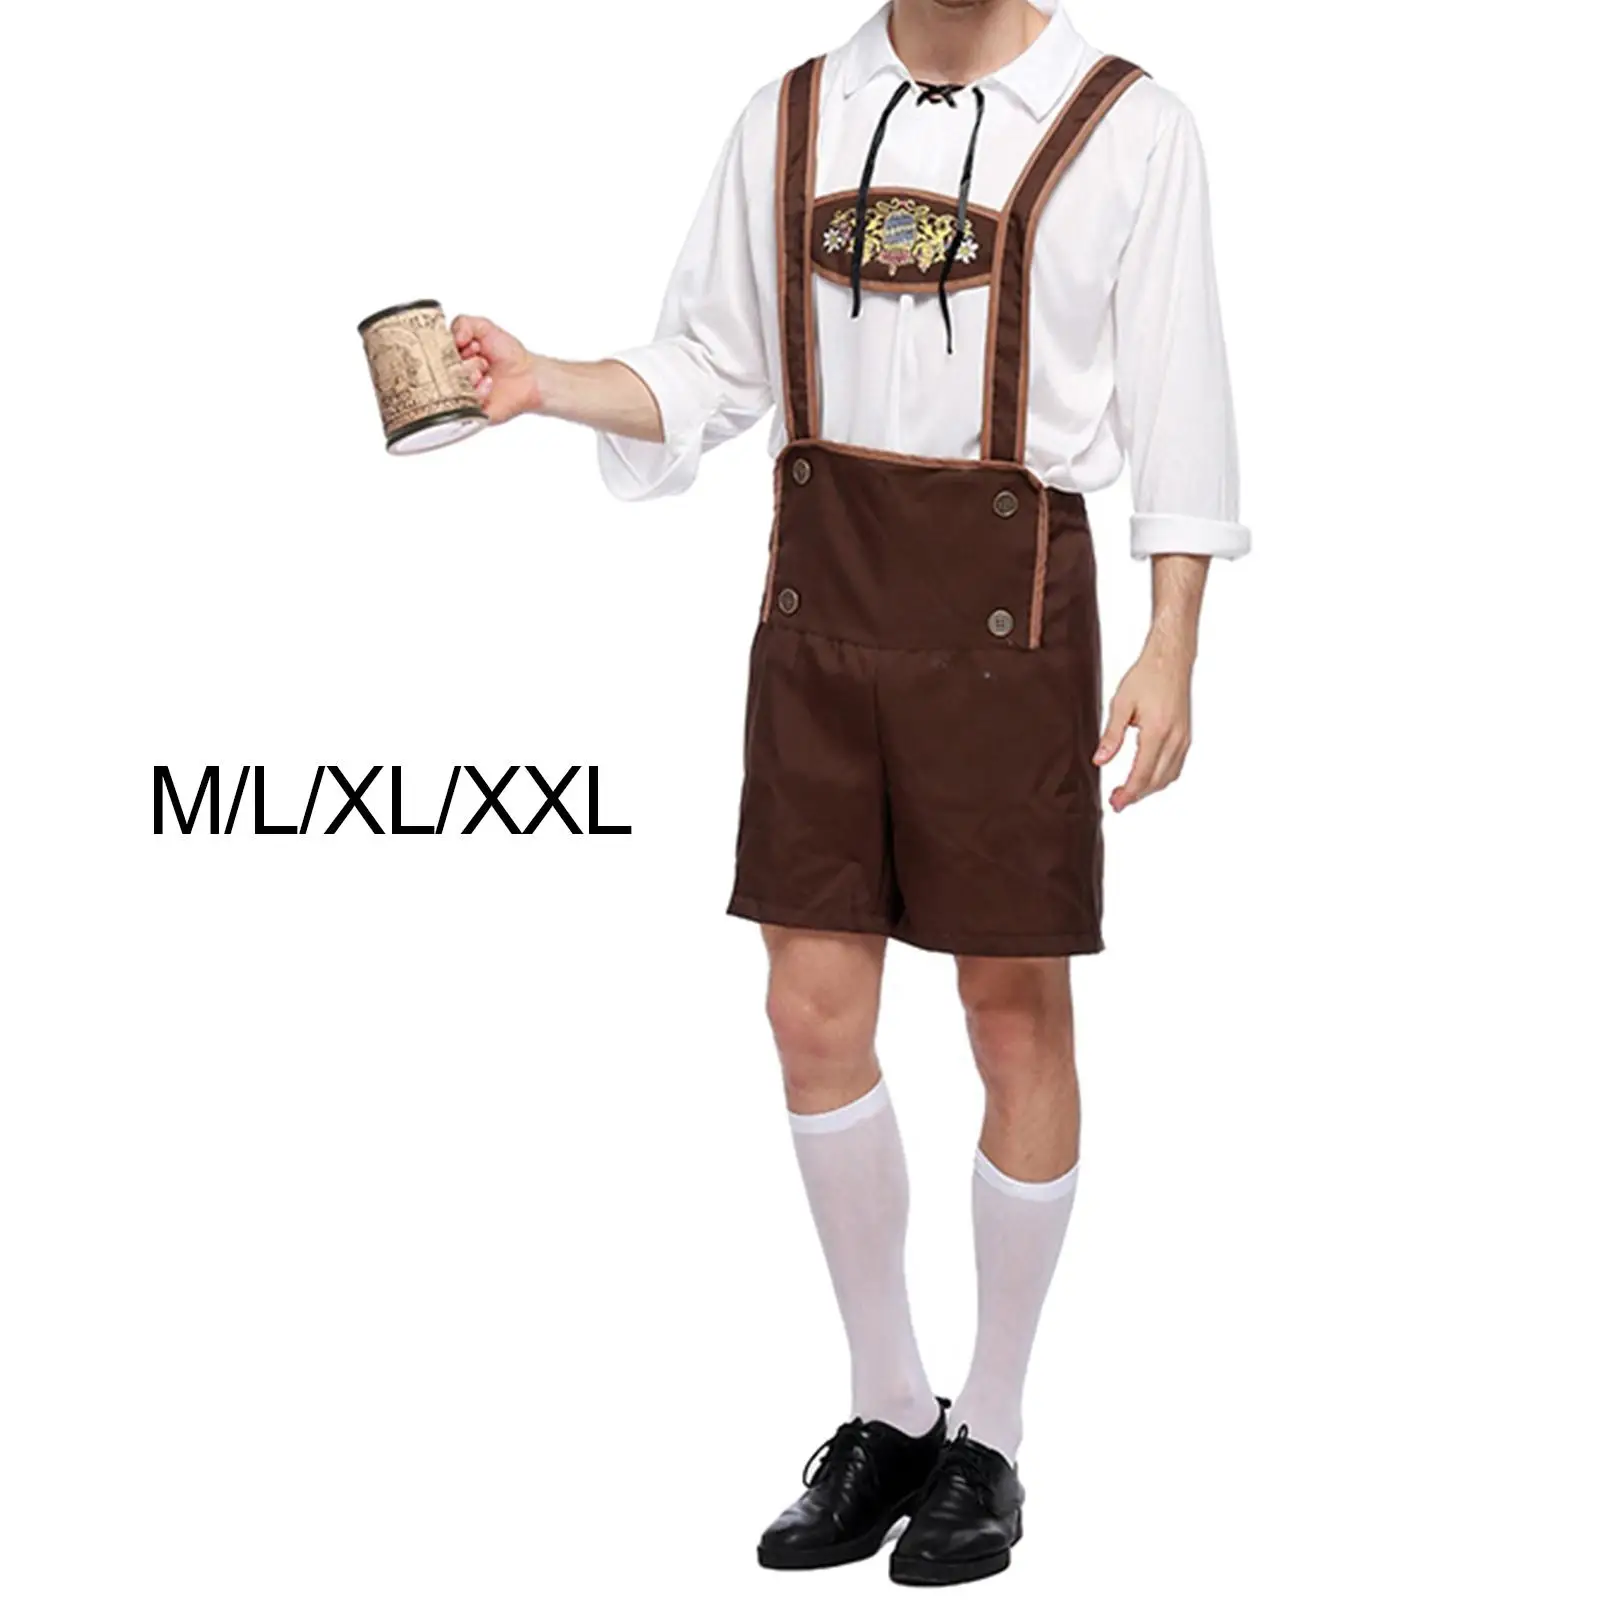 Beer Lederhosen Costume Halloween Bavarian Carnival Party Cosplay Suspenders Shorts